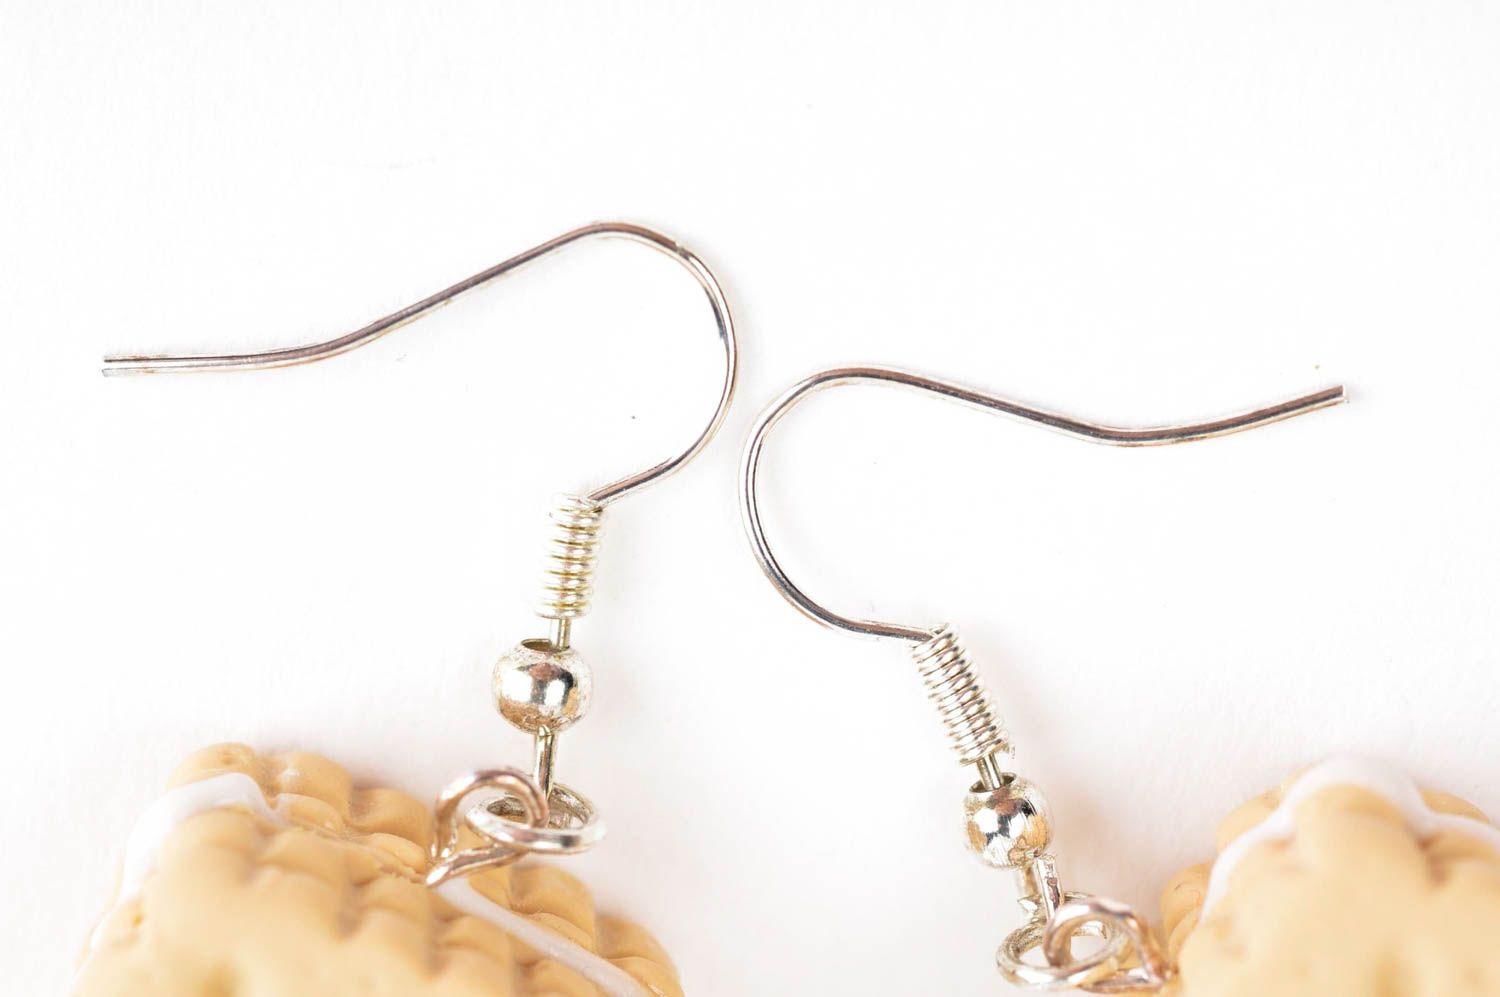 Handmade clay earrings designer accessories gift ideas unusual jewelry photo 4